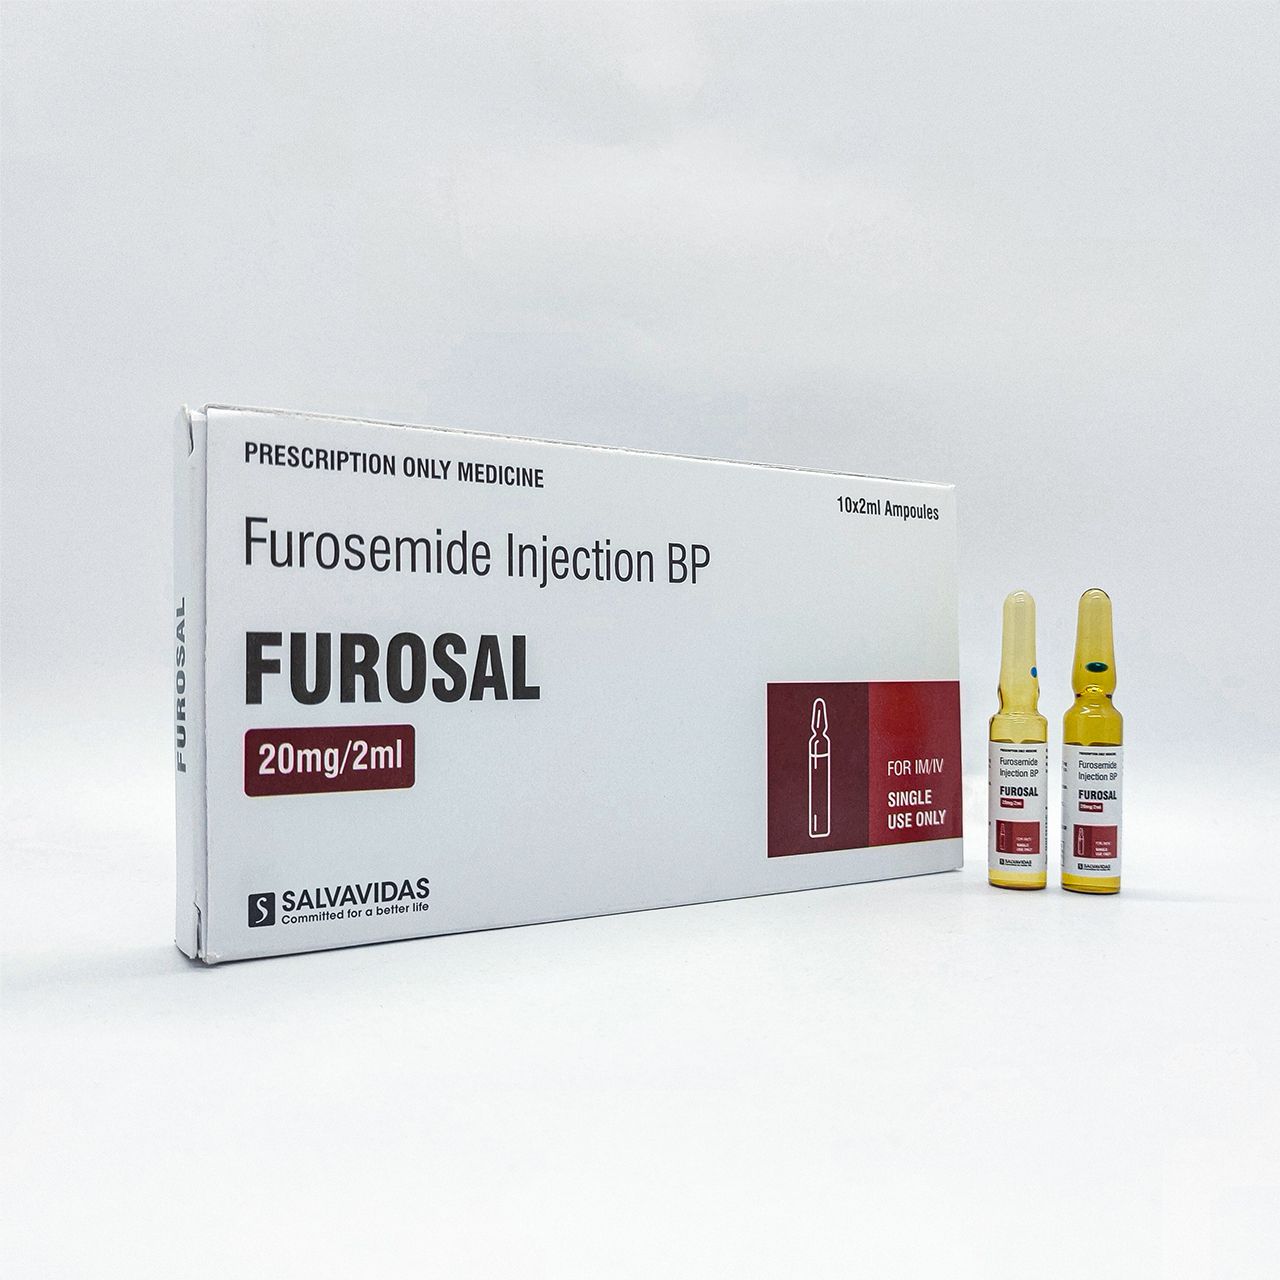 Furosemide injection BP